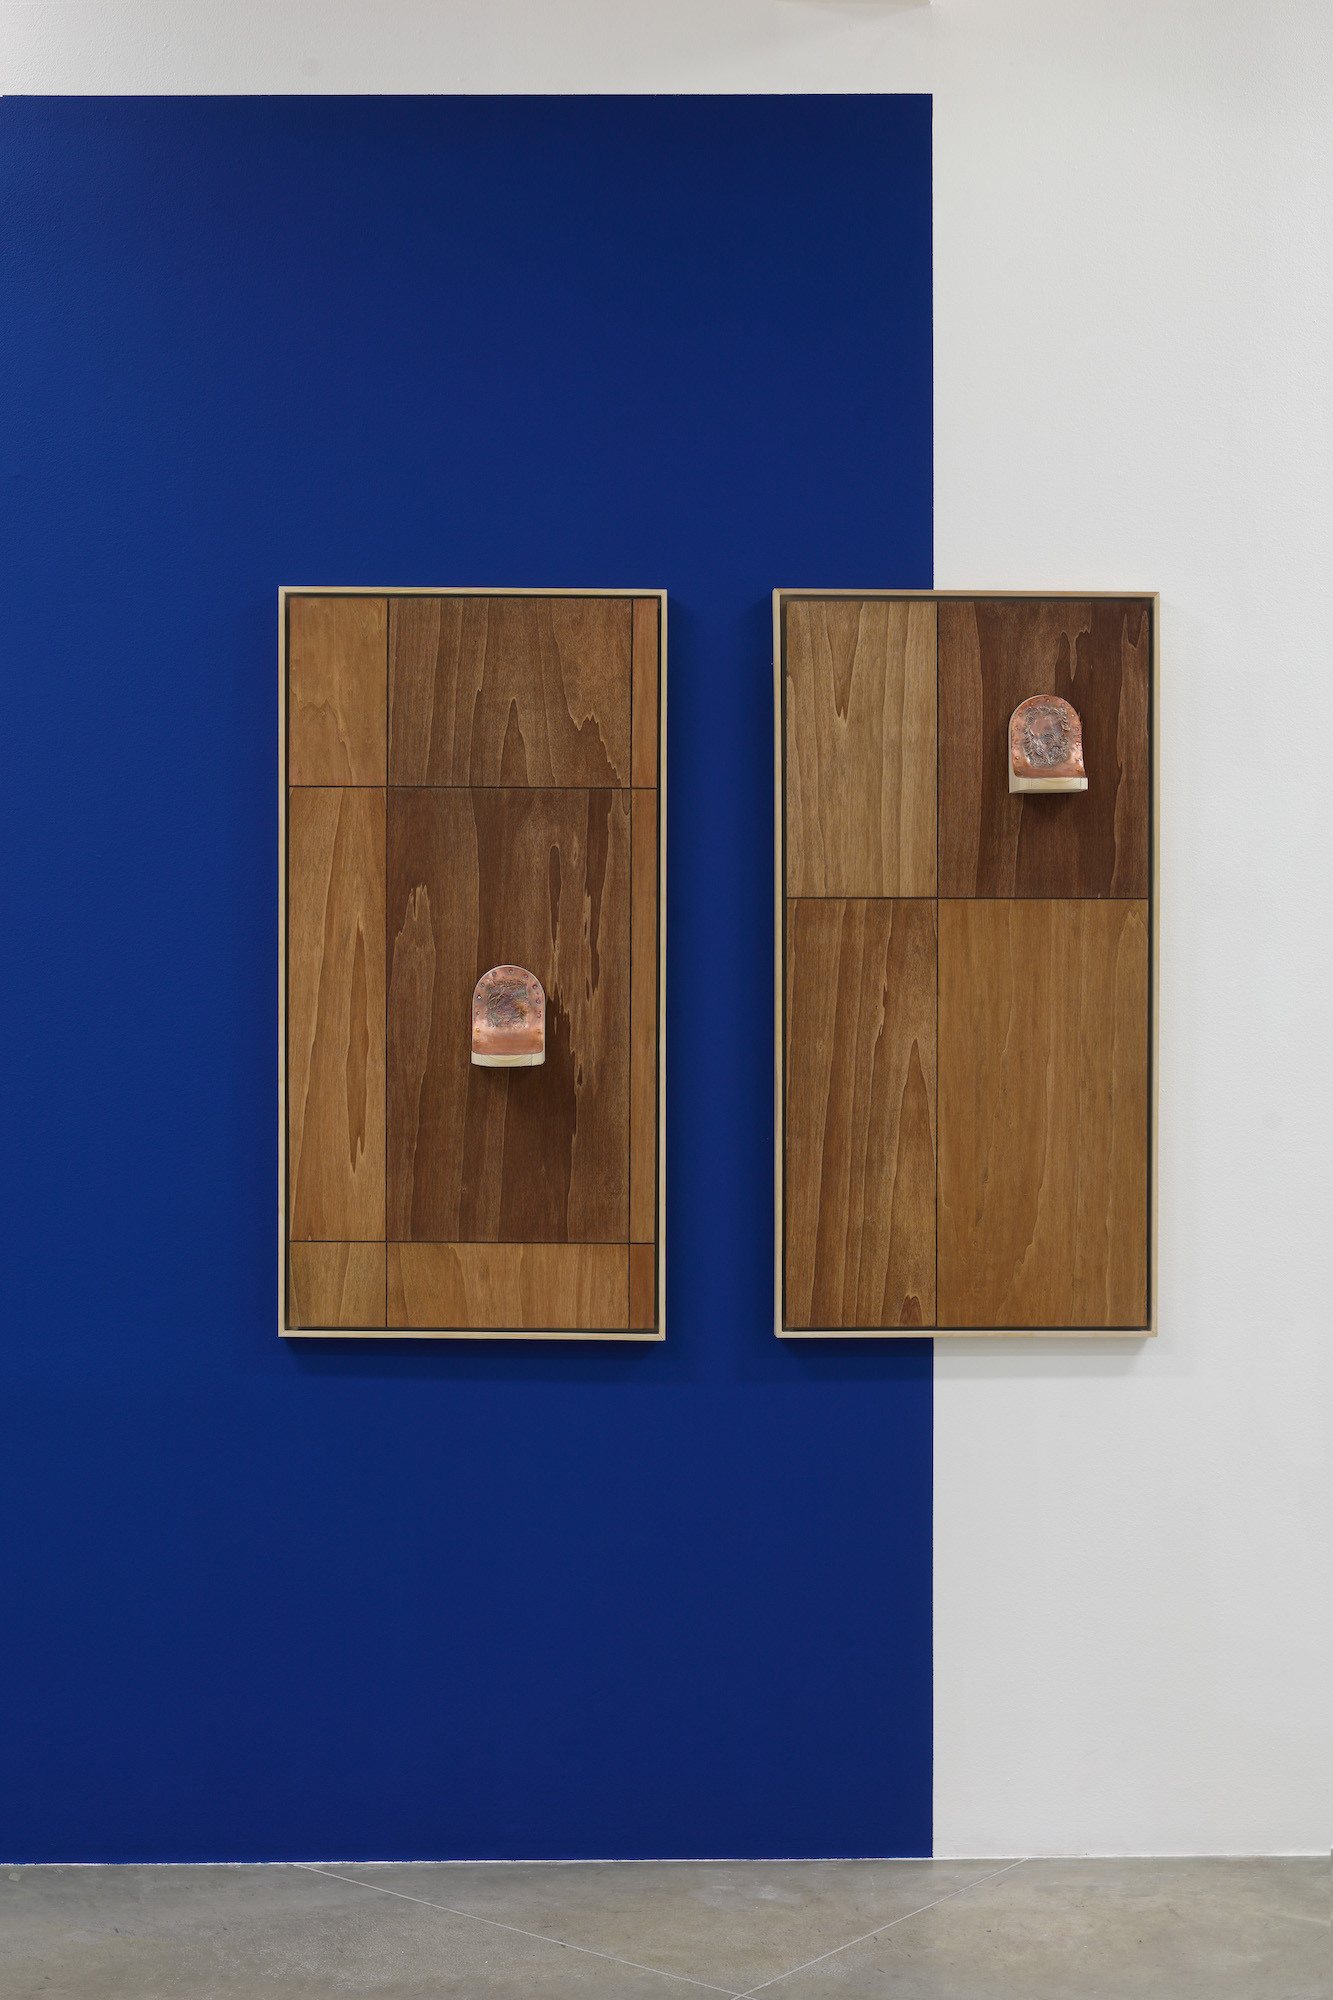 Filip Dvořák, From Headmaster‘s House (Ravine Culture series), 2021, wood, copper various dimensions